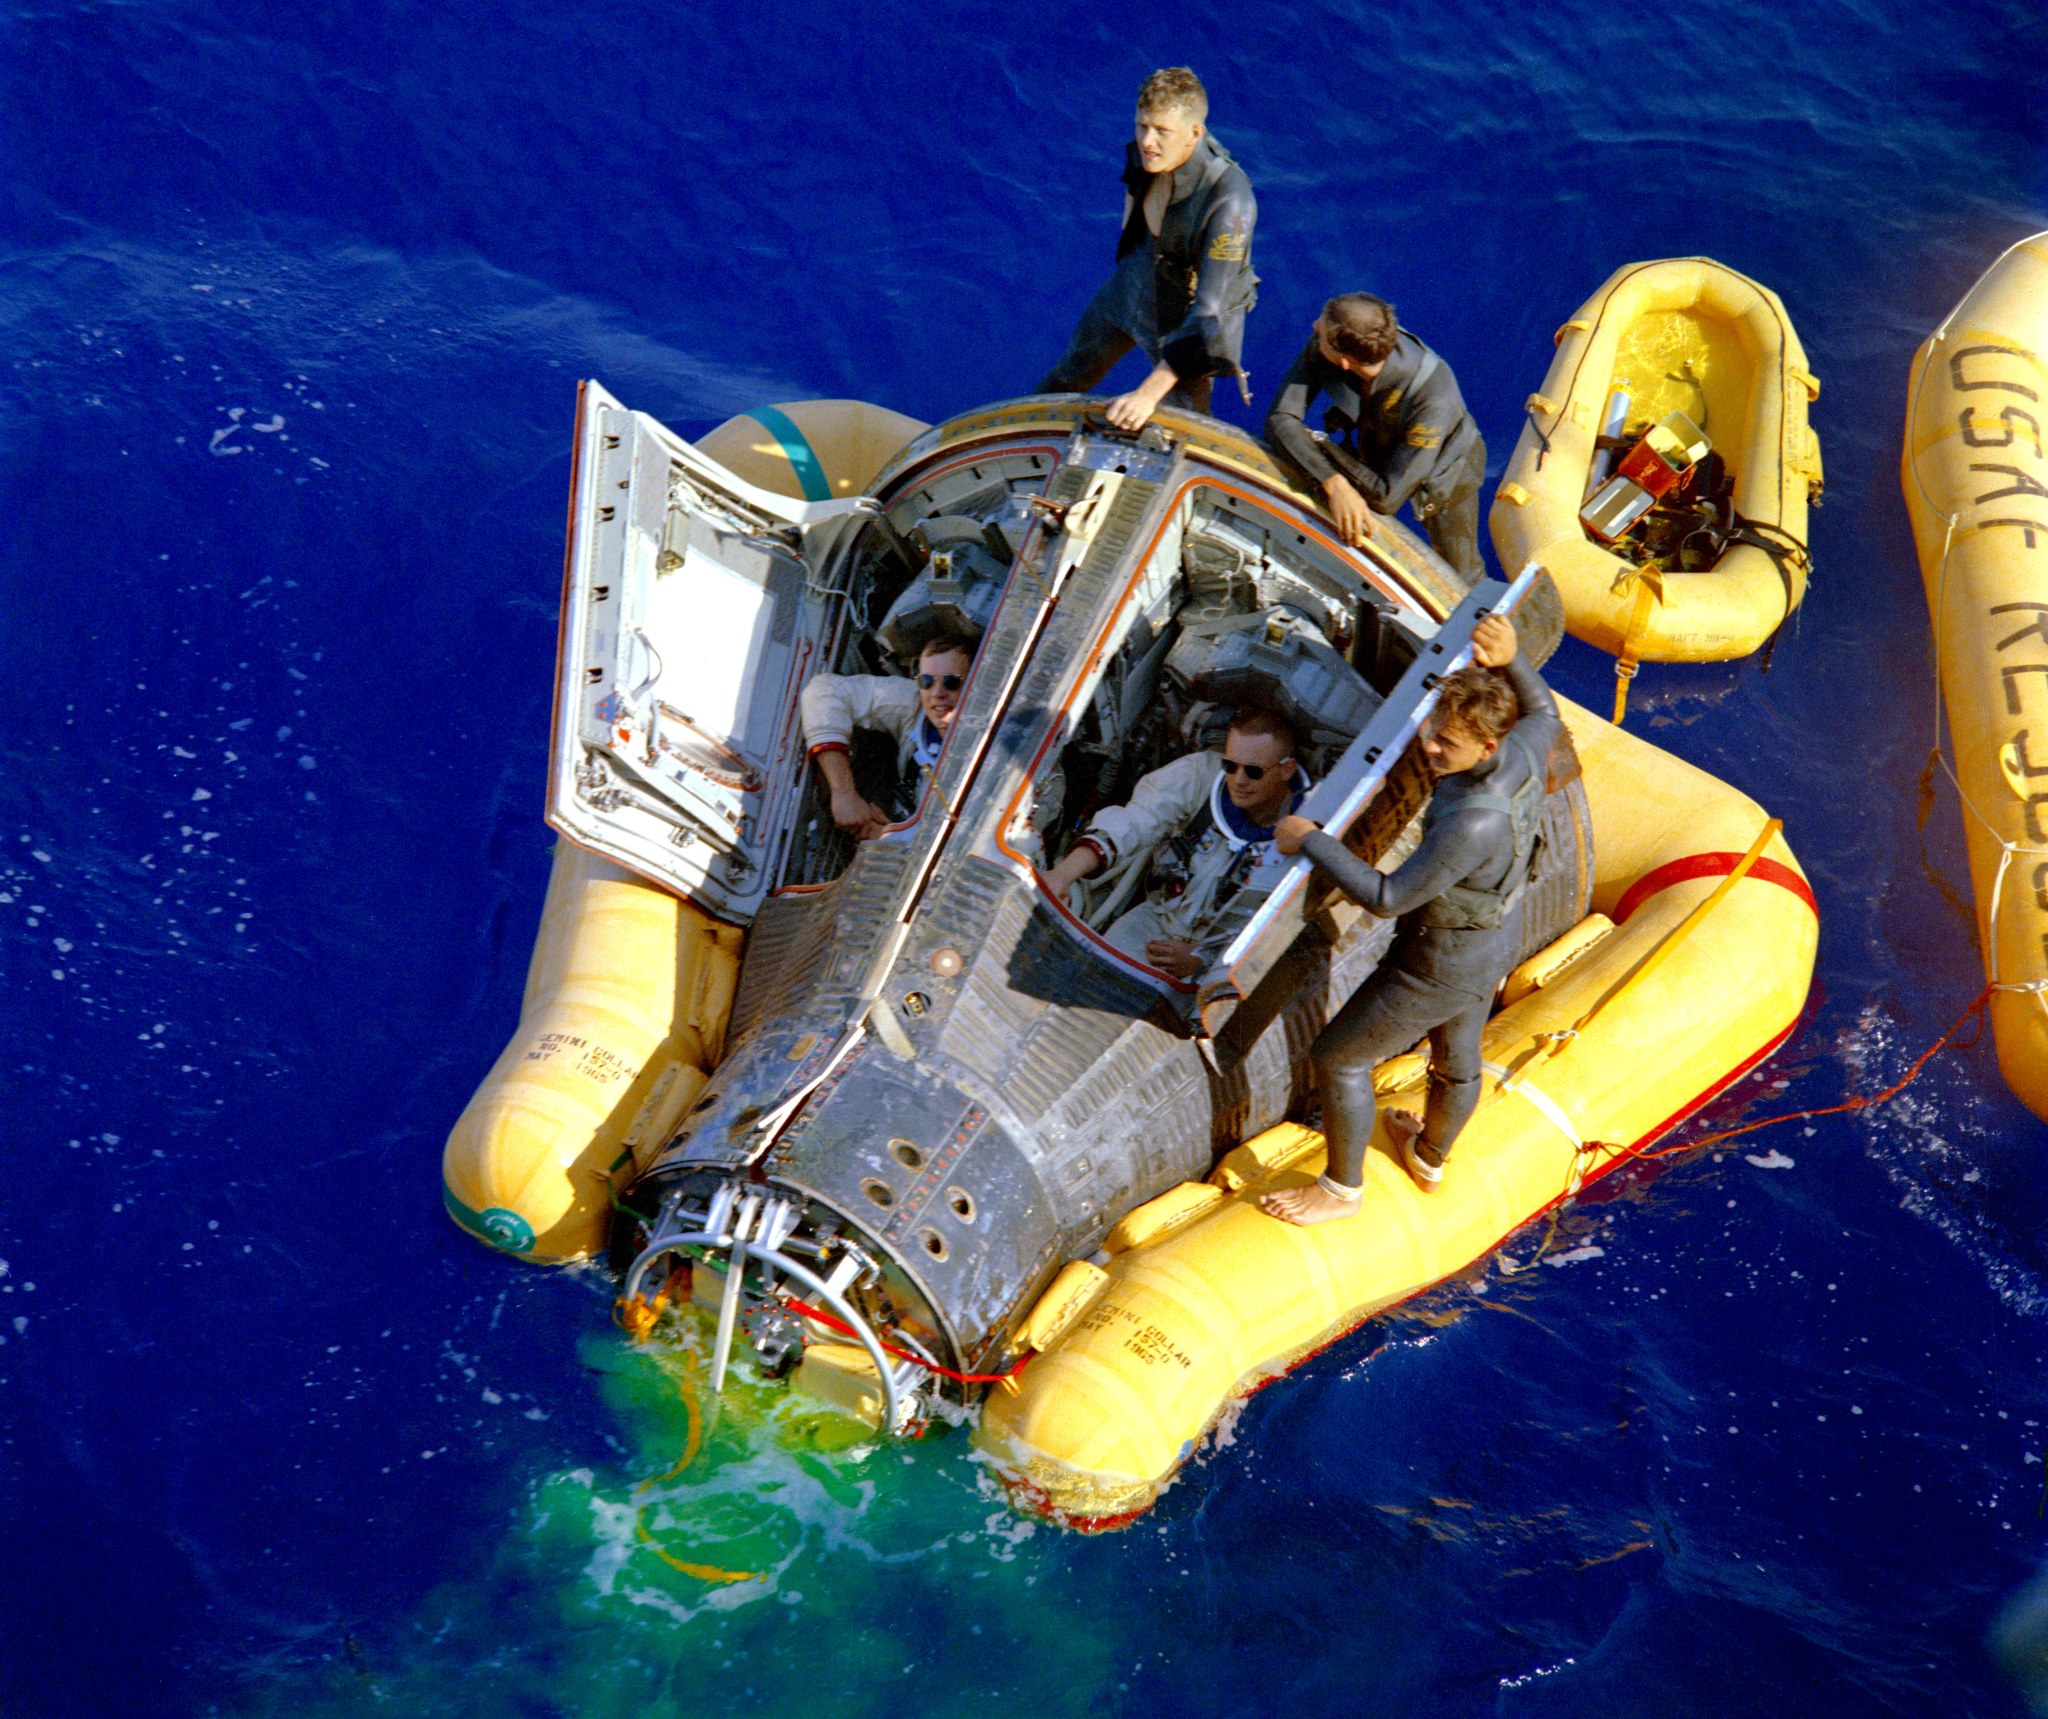 Gemini VIII recovery